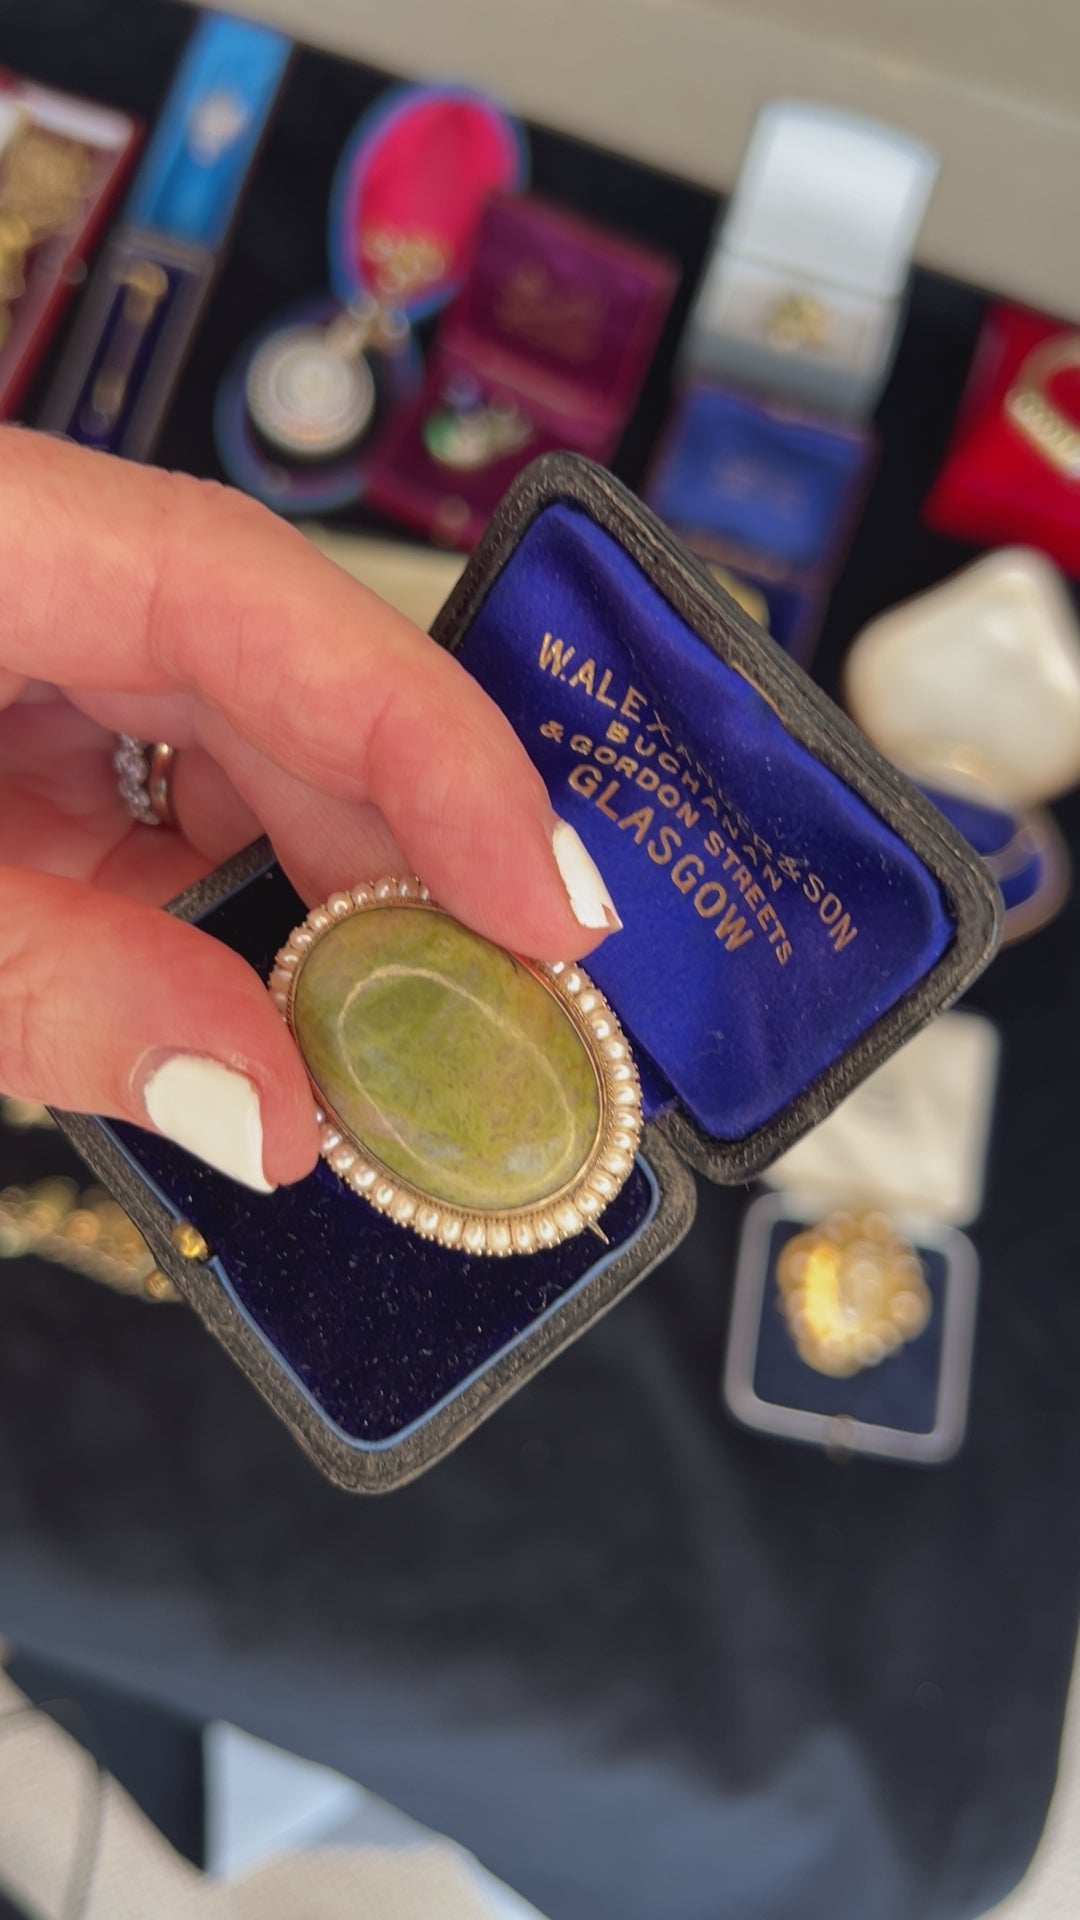 1800s Unakite, Natural Pearls and 14K Yellow Gold Engraved Brooch